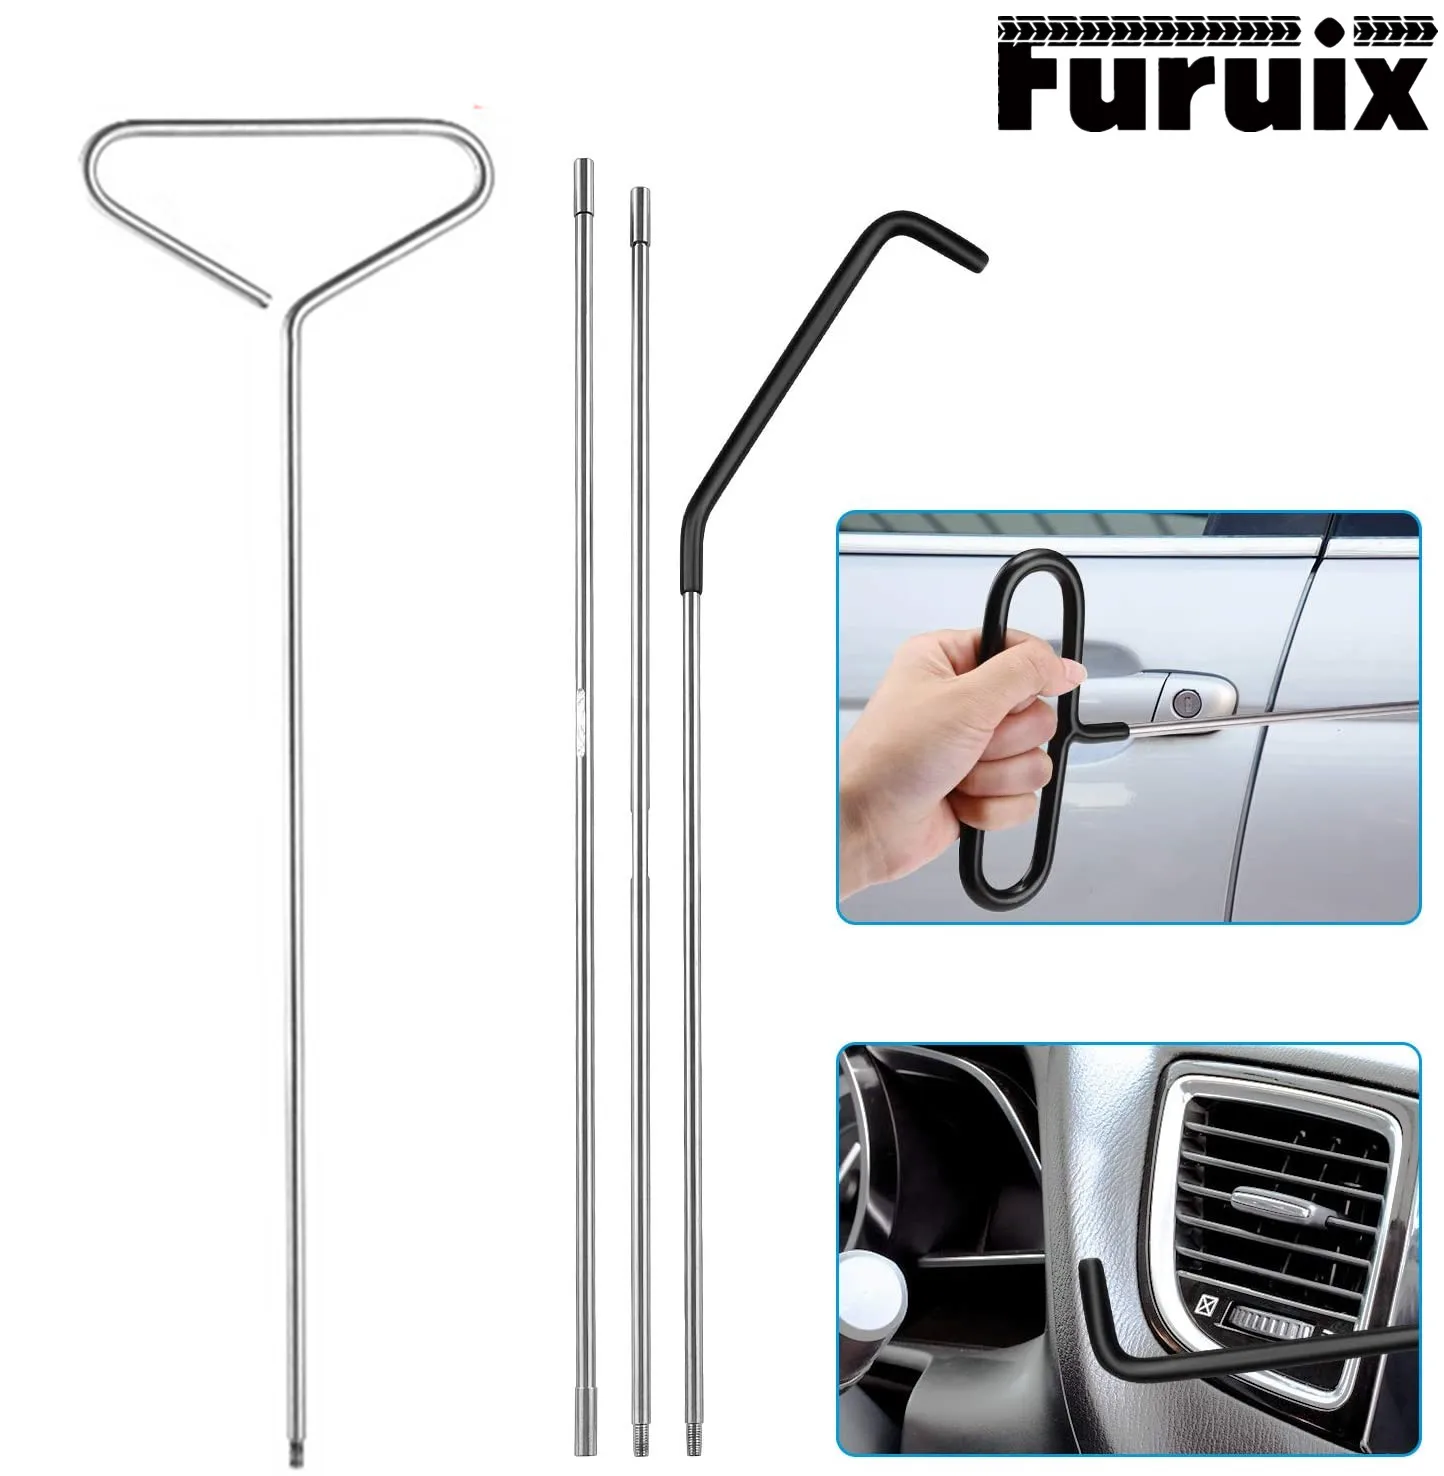 FURUIX Car Lockout Kit, Slim Jim Car Door Opener, Car Door Opener Kit, Lockout Kits for Vehicles